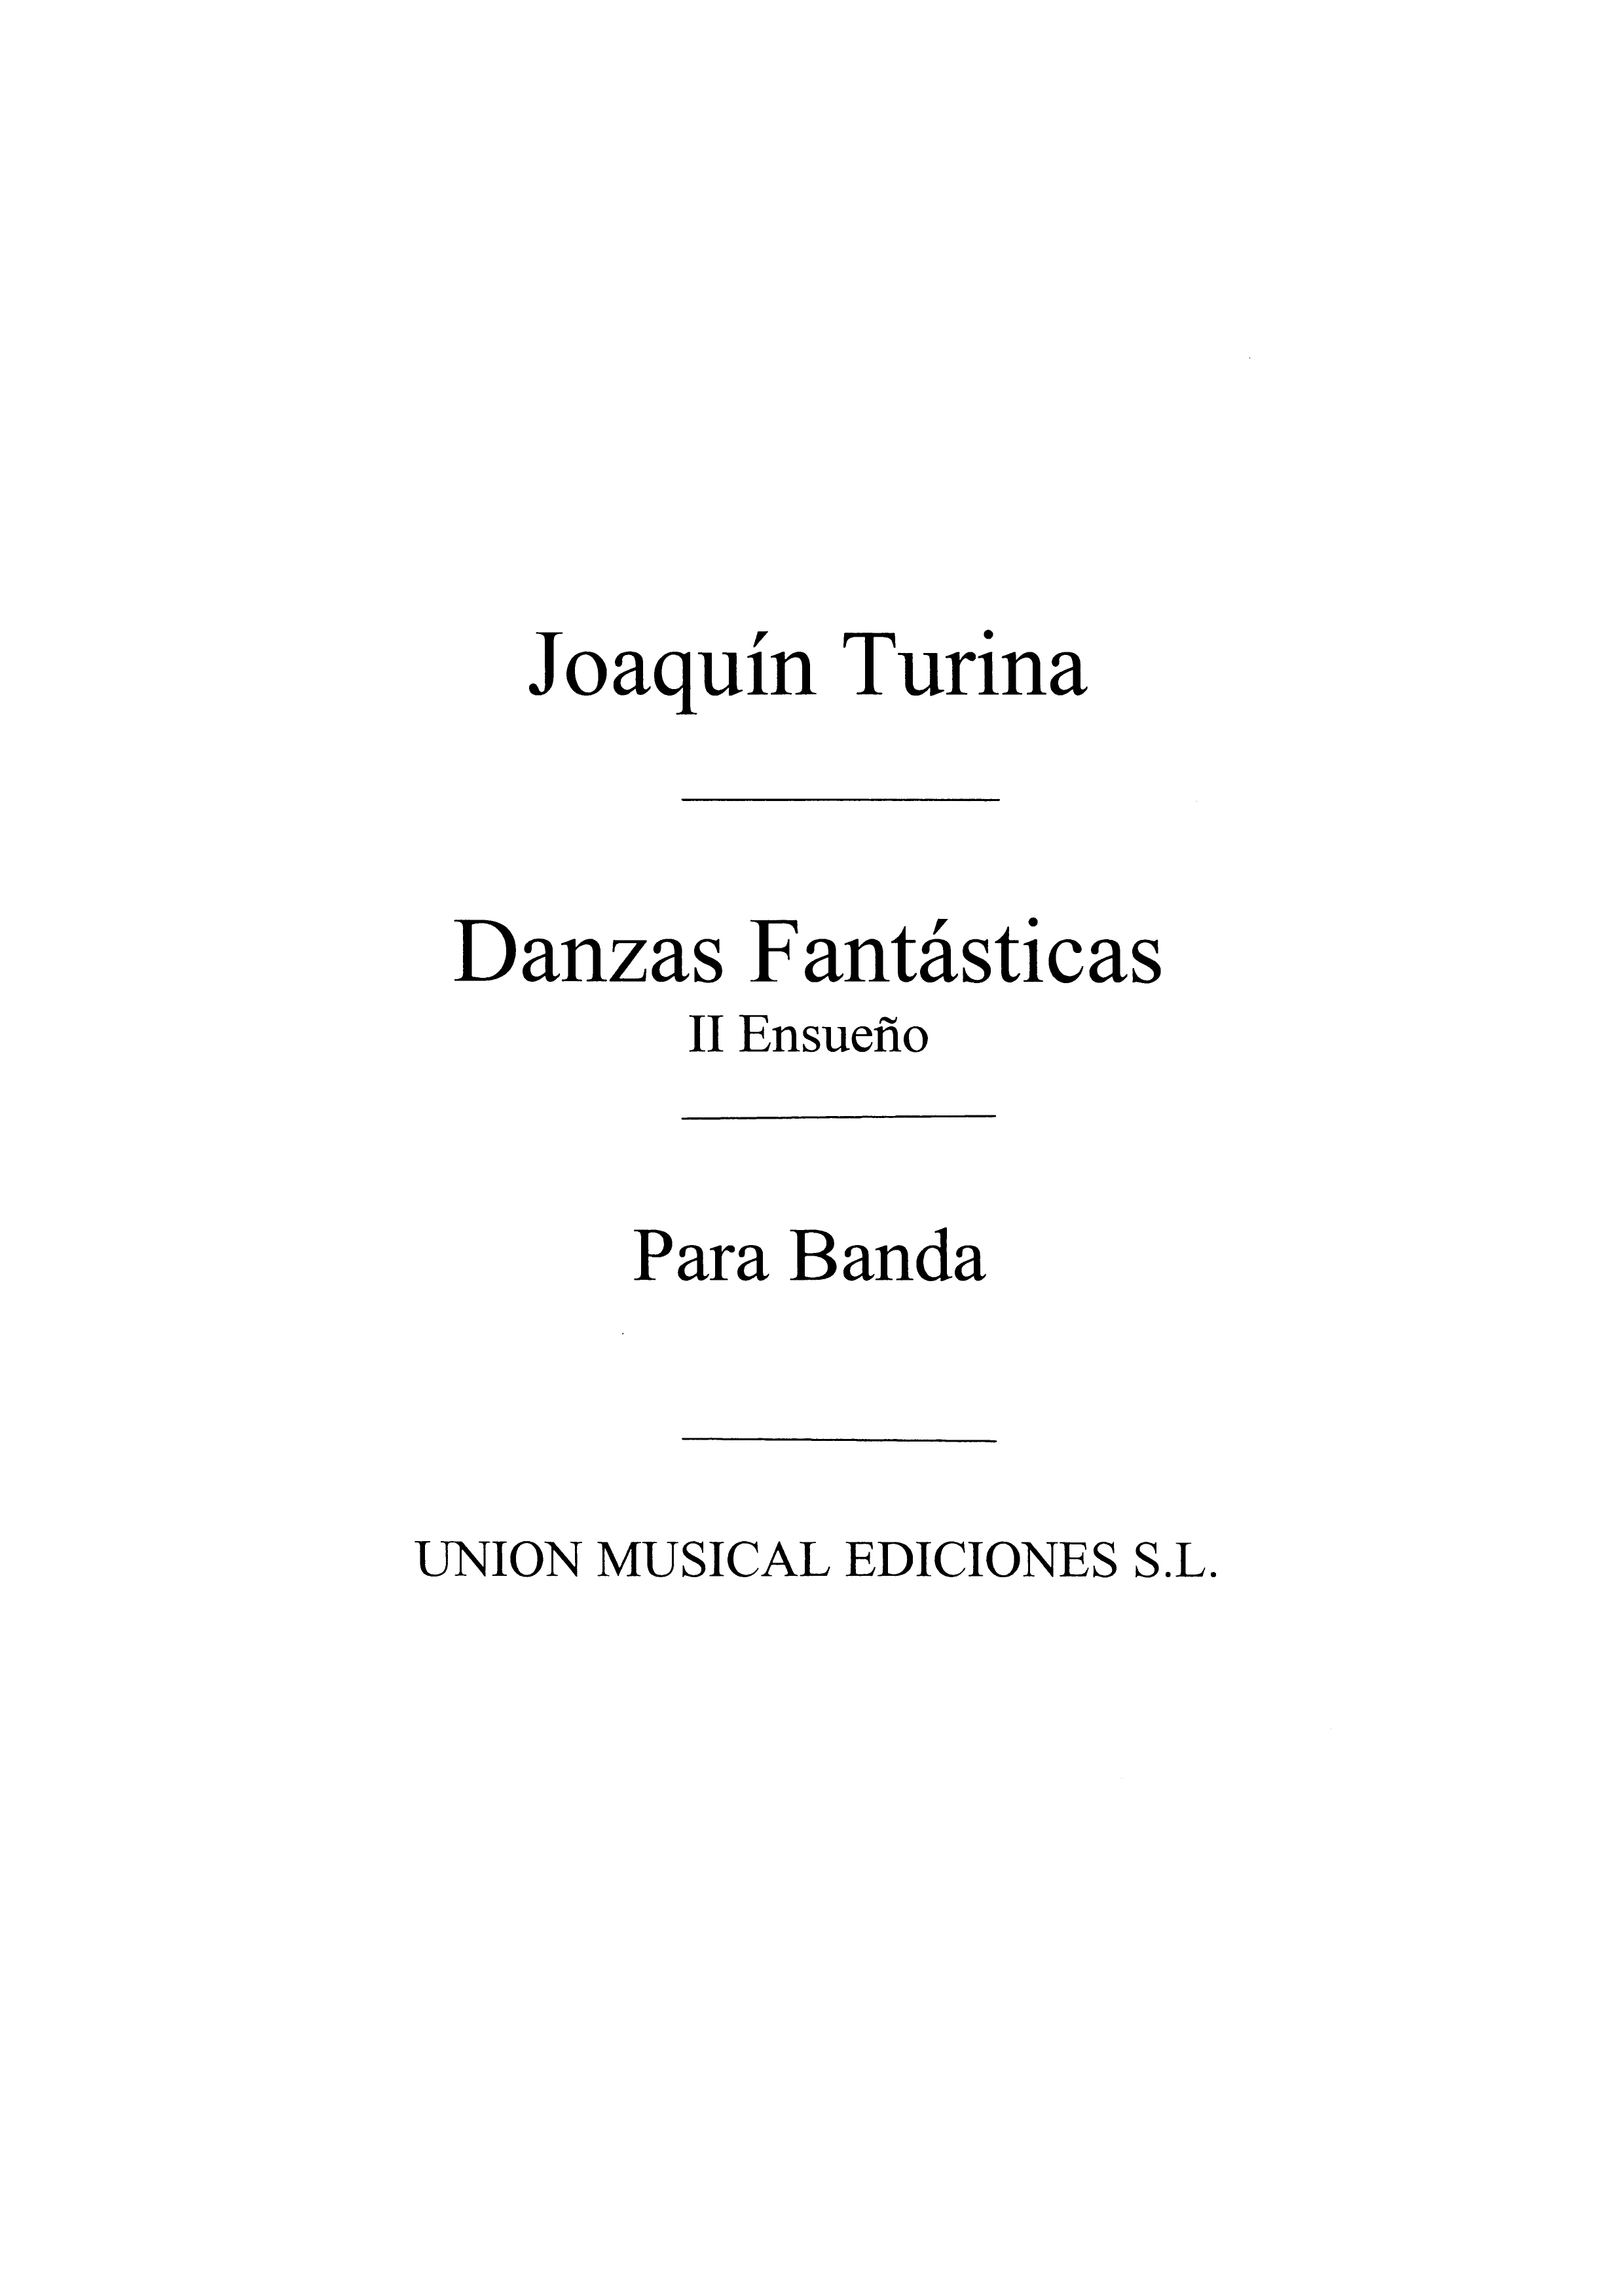 Joaqun Turina: Ensueno From Danzas Fantasticas No.2: Concert Band: Instrumental